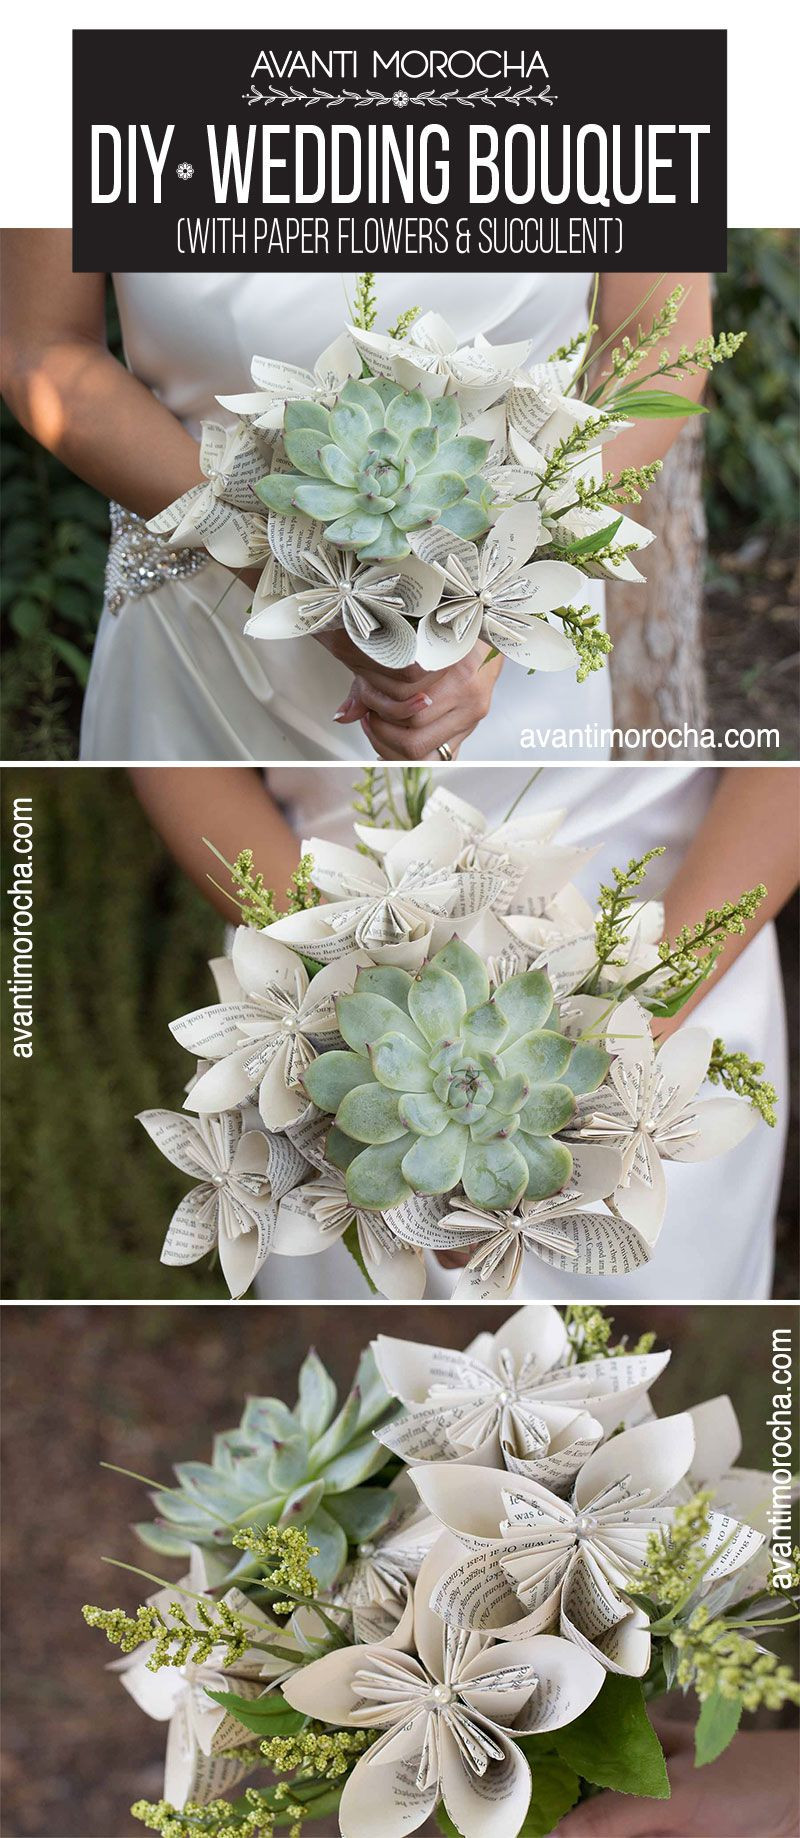 Succulent Wedding Bouquet DIY
 DIY Wedding Bouquet with Paper Flowers and Succulent